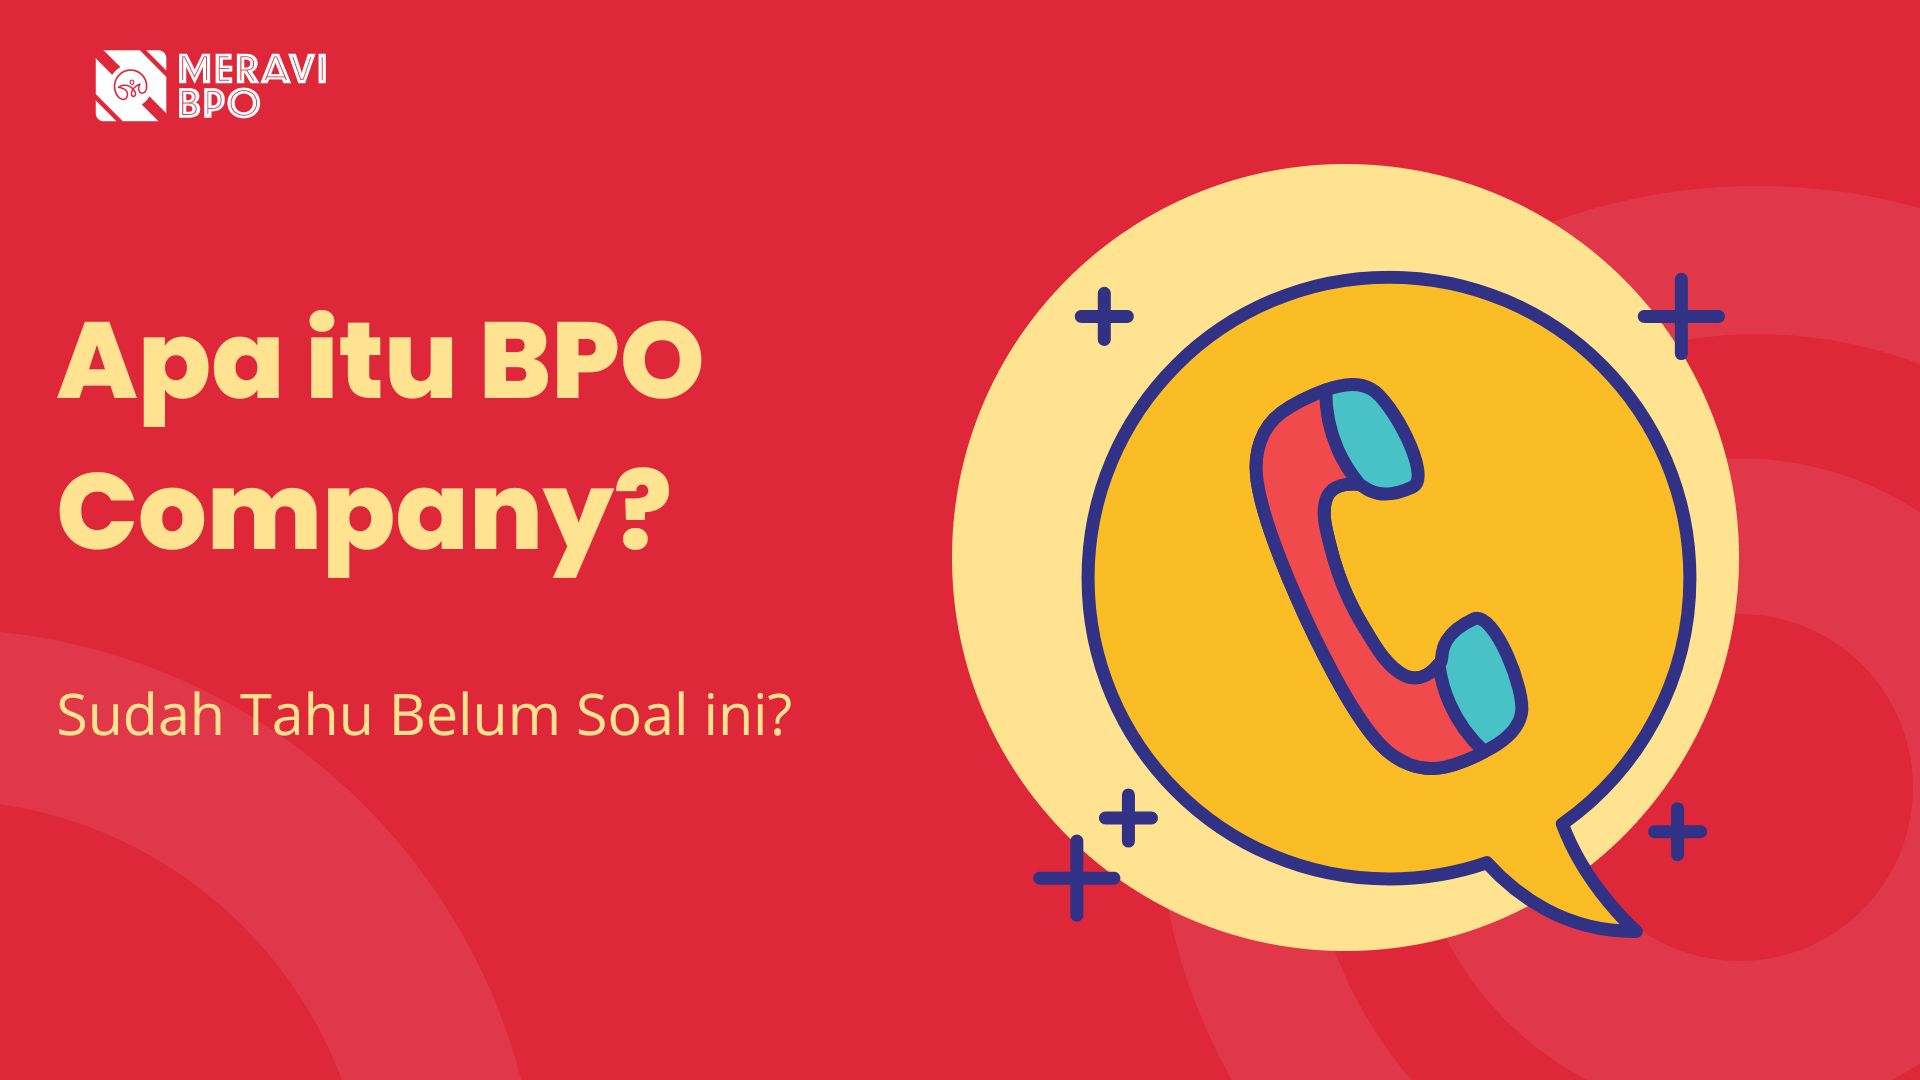 Apa itu BPO Company?